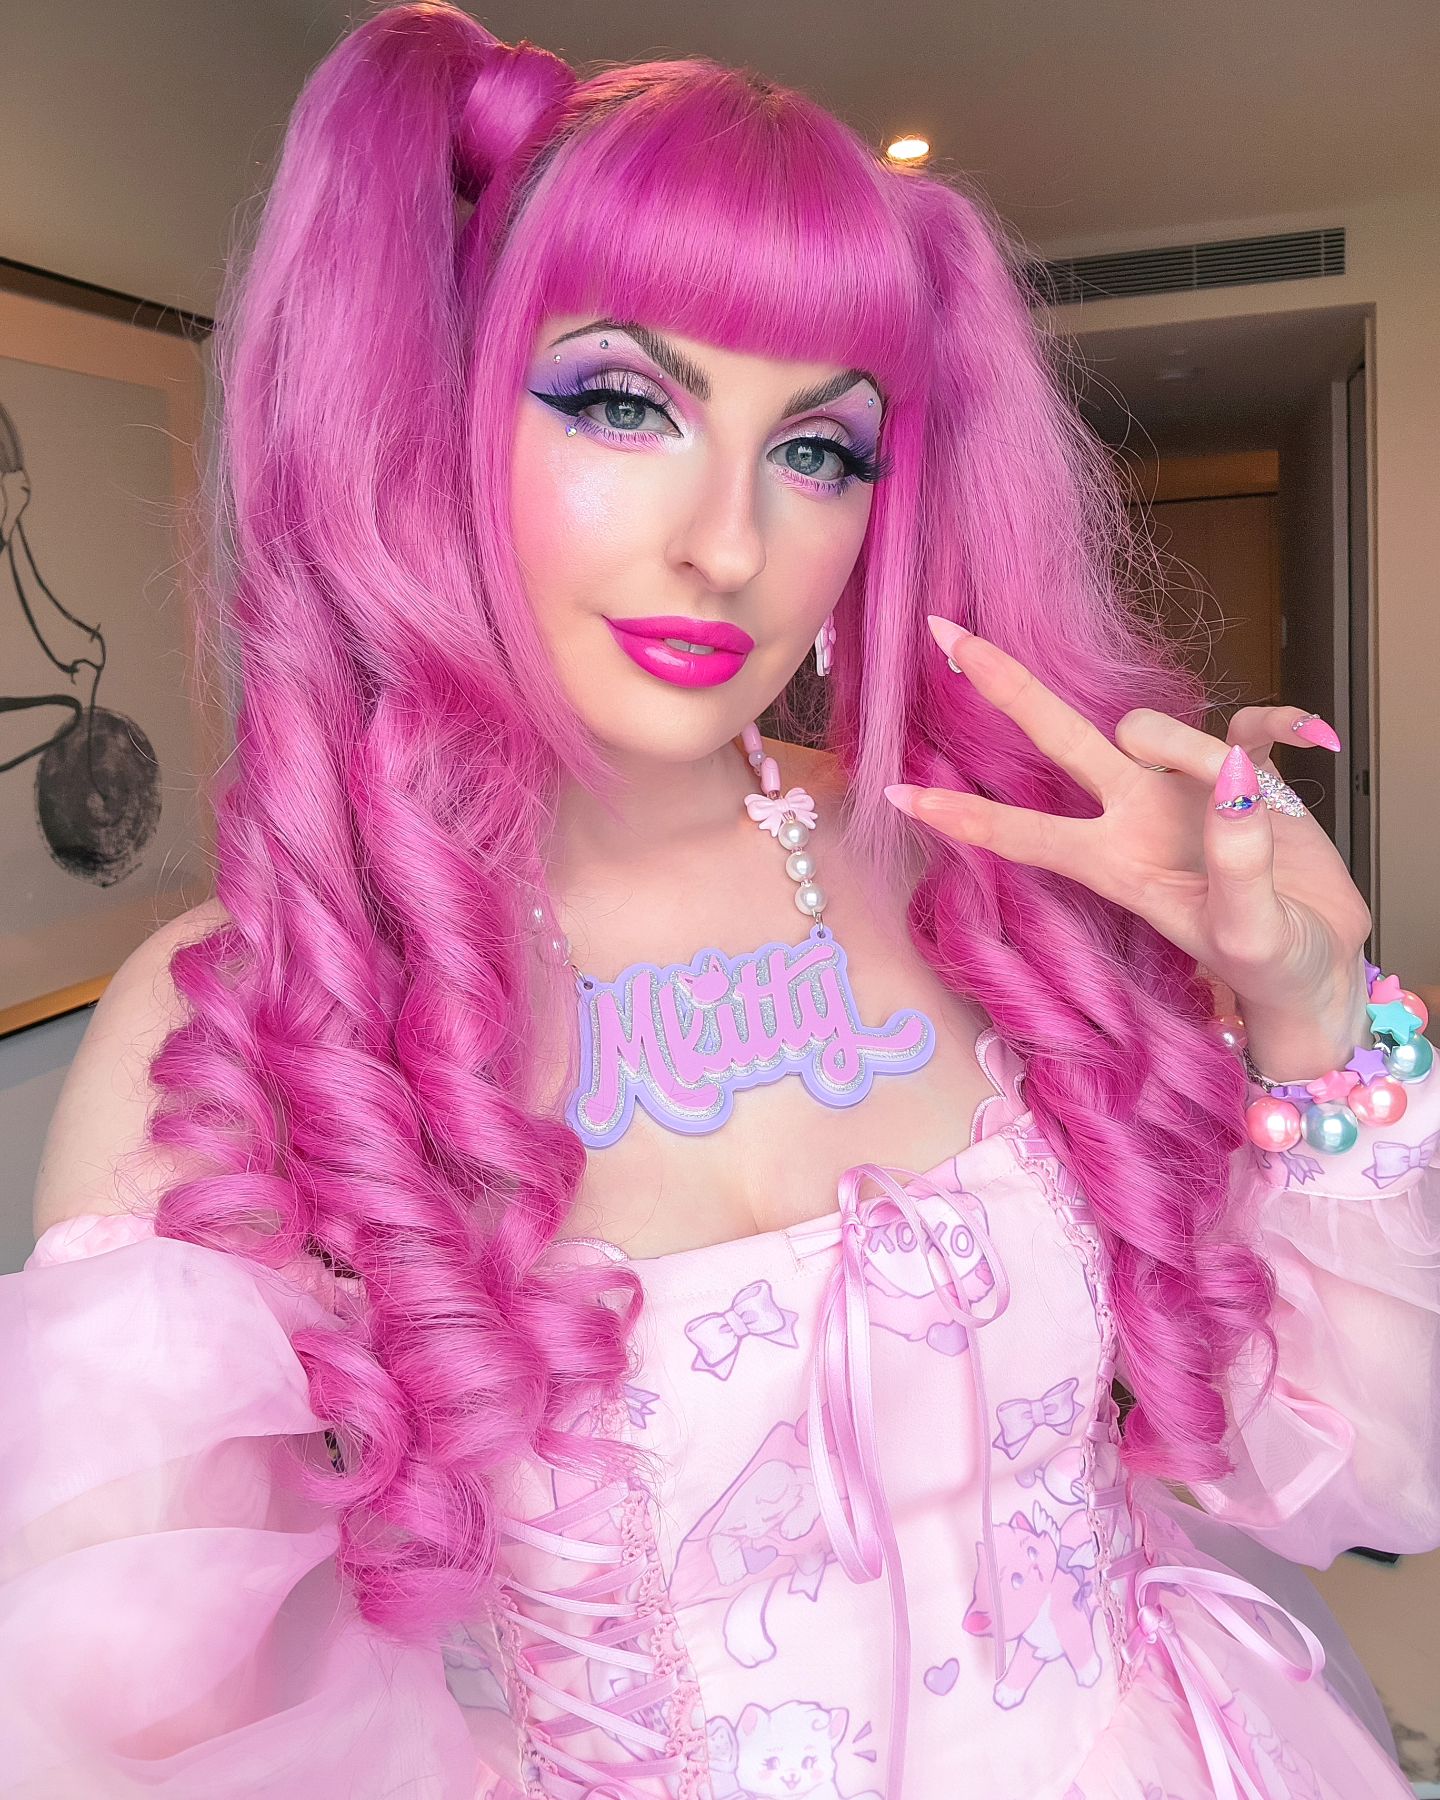 🩷🌸I felt like a Kitty Cupcake with this look🌸🩷

#makeup #makeupartist #pasteleyeshadow #egirl #pink #pinkhair #arcticfox #plouise #urbandecay #colourpop #colourpopme #hauslabs #onesize #gamergirl #streamer